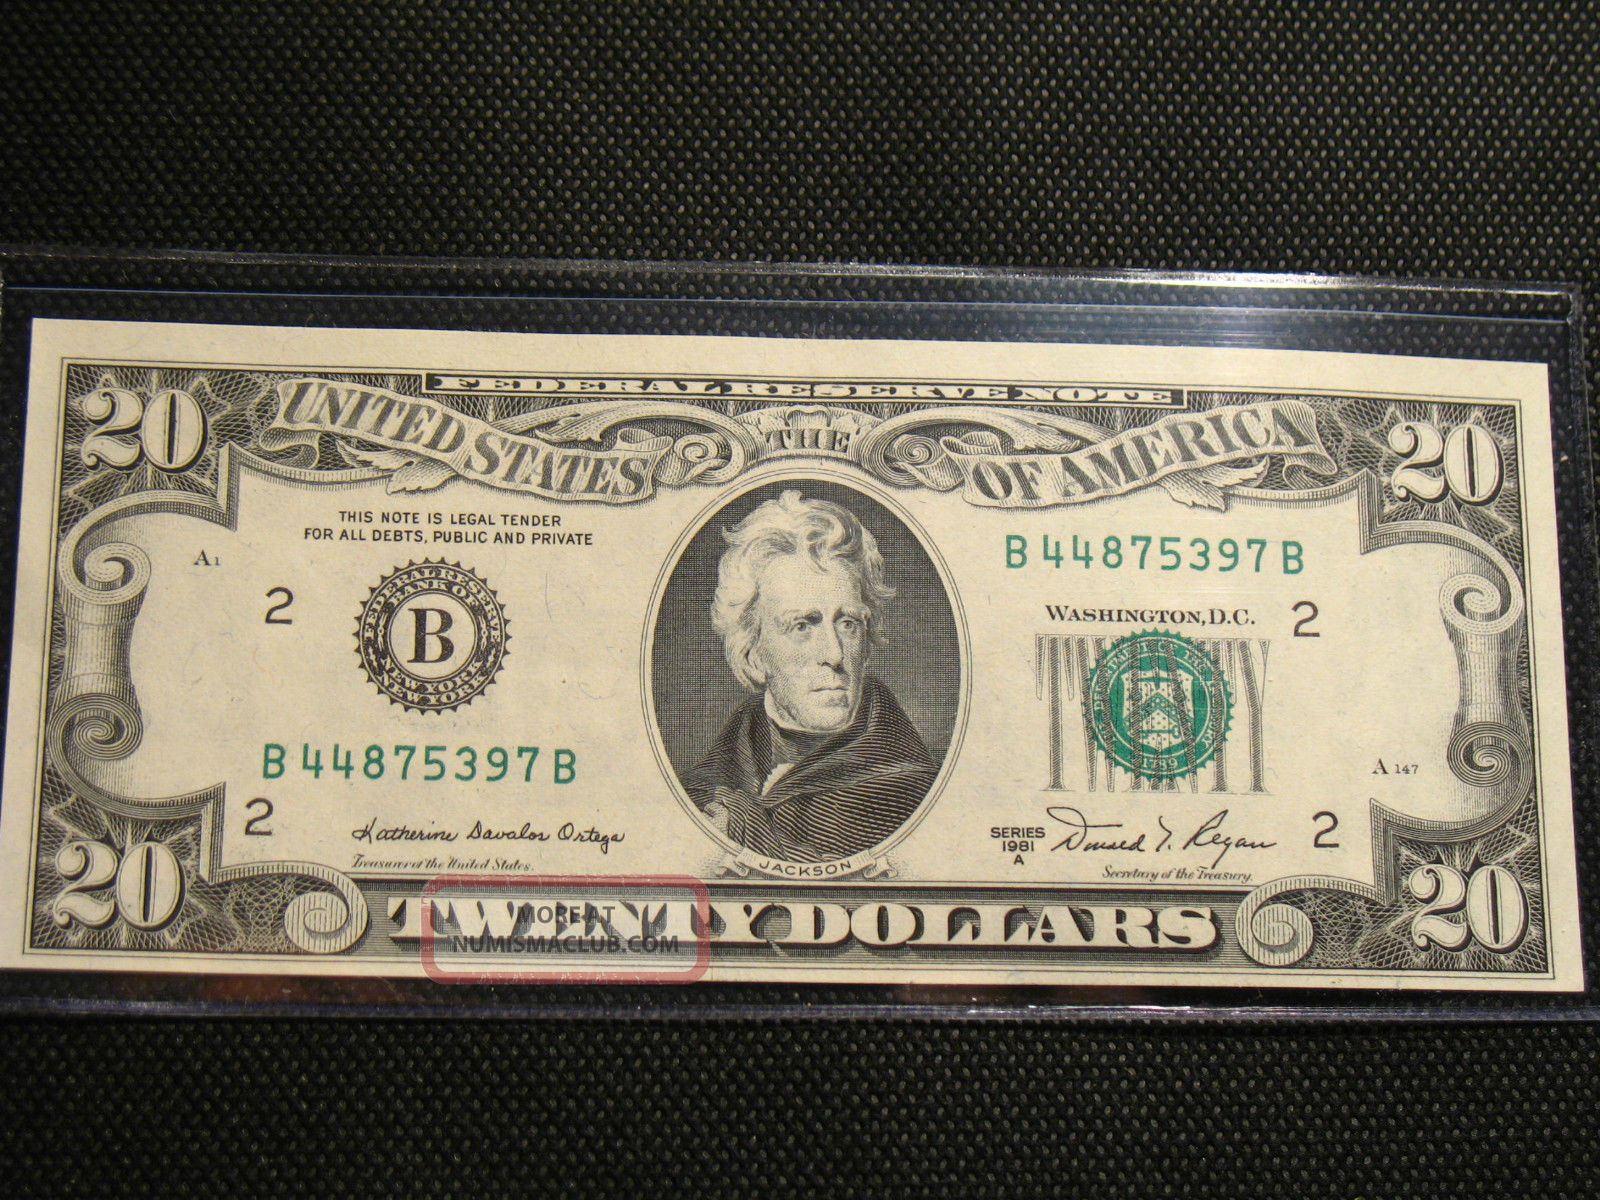 1981a $20 Dollar Bill York Small Note B44875397b Choice Crisp Uncirculated Small Size Notes photo